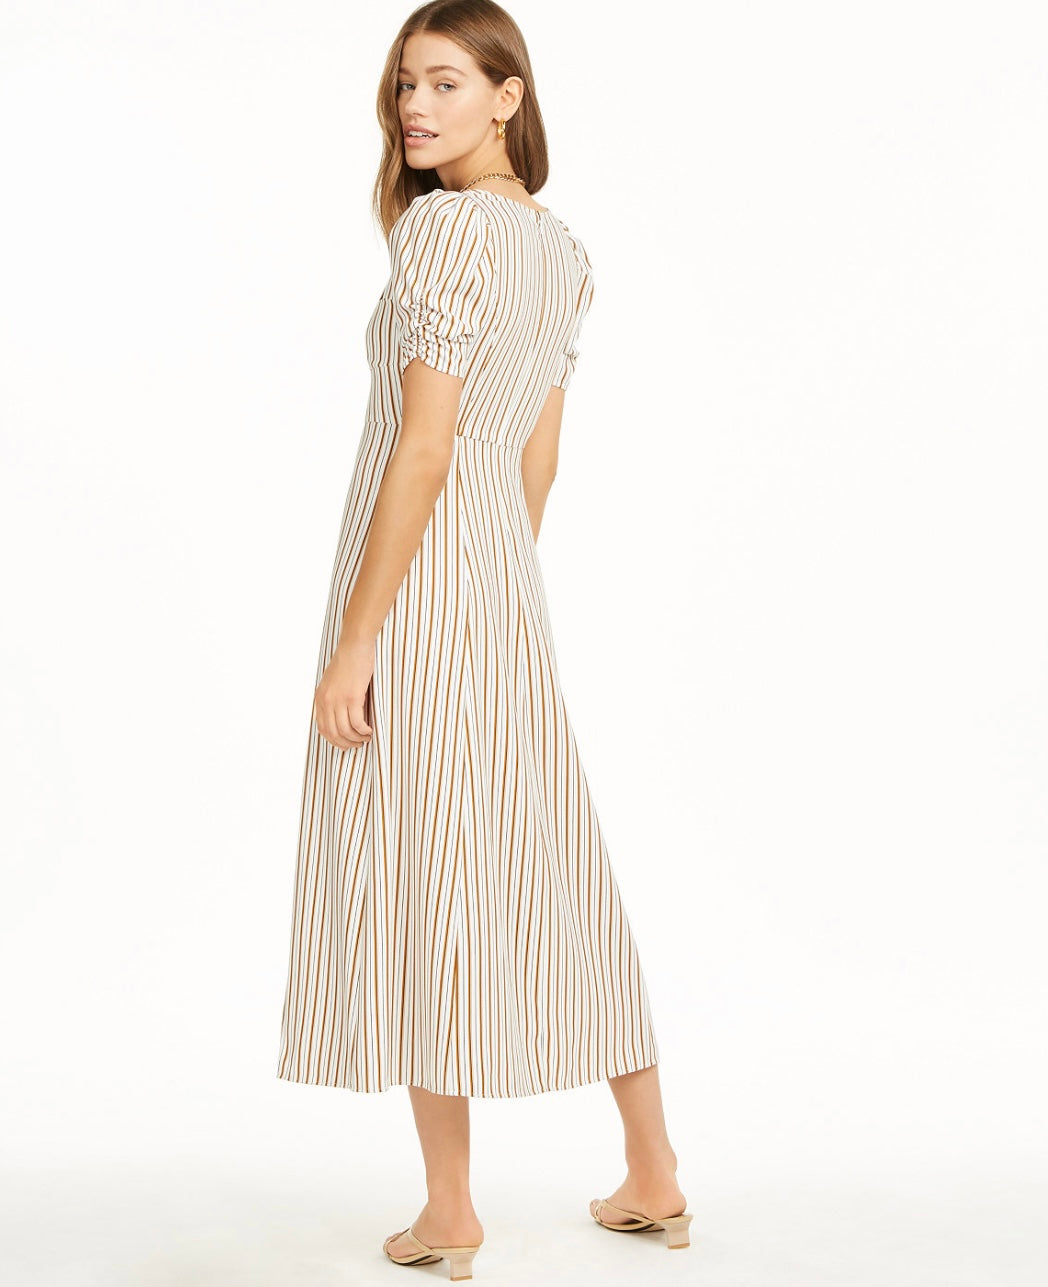 Danielle Bernstein Women's Striped Queen Anne Neckline Tea-Length Shift Dress